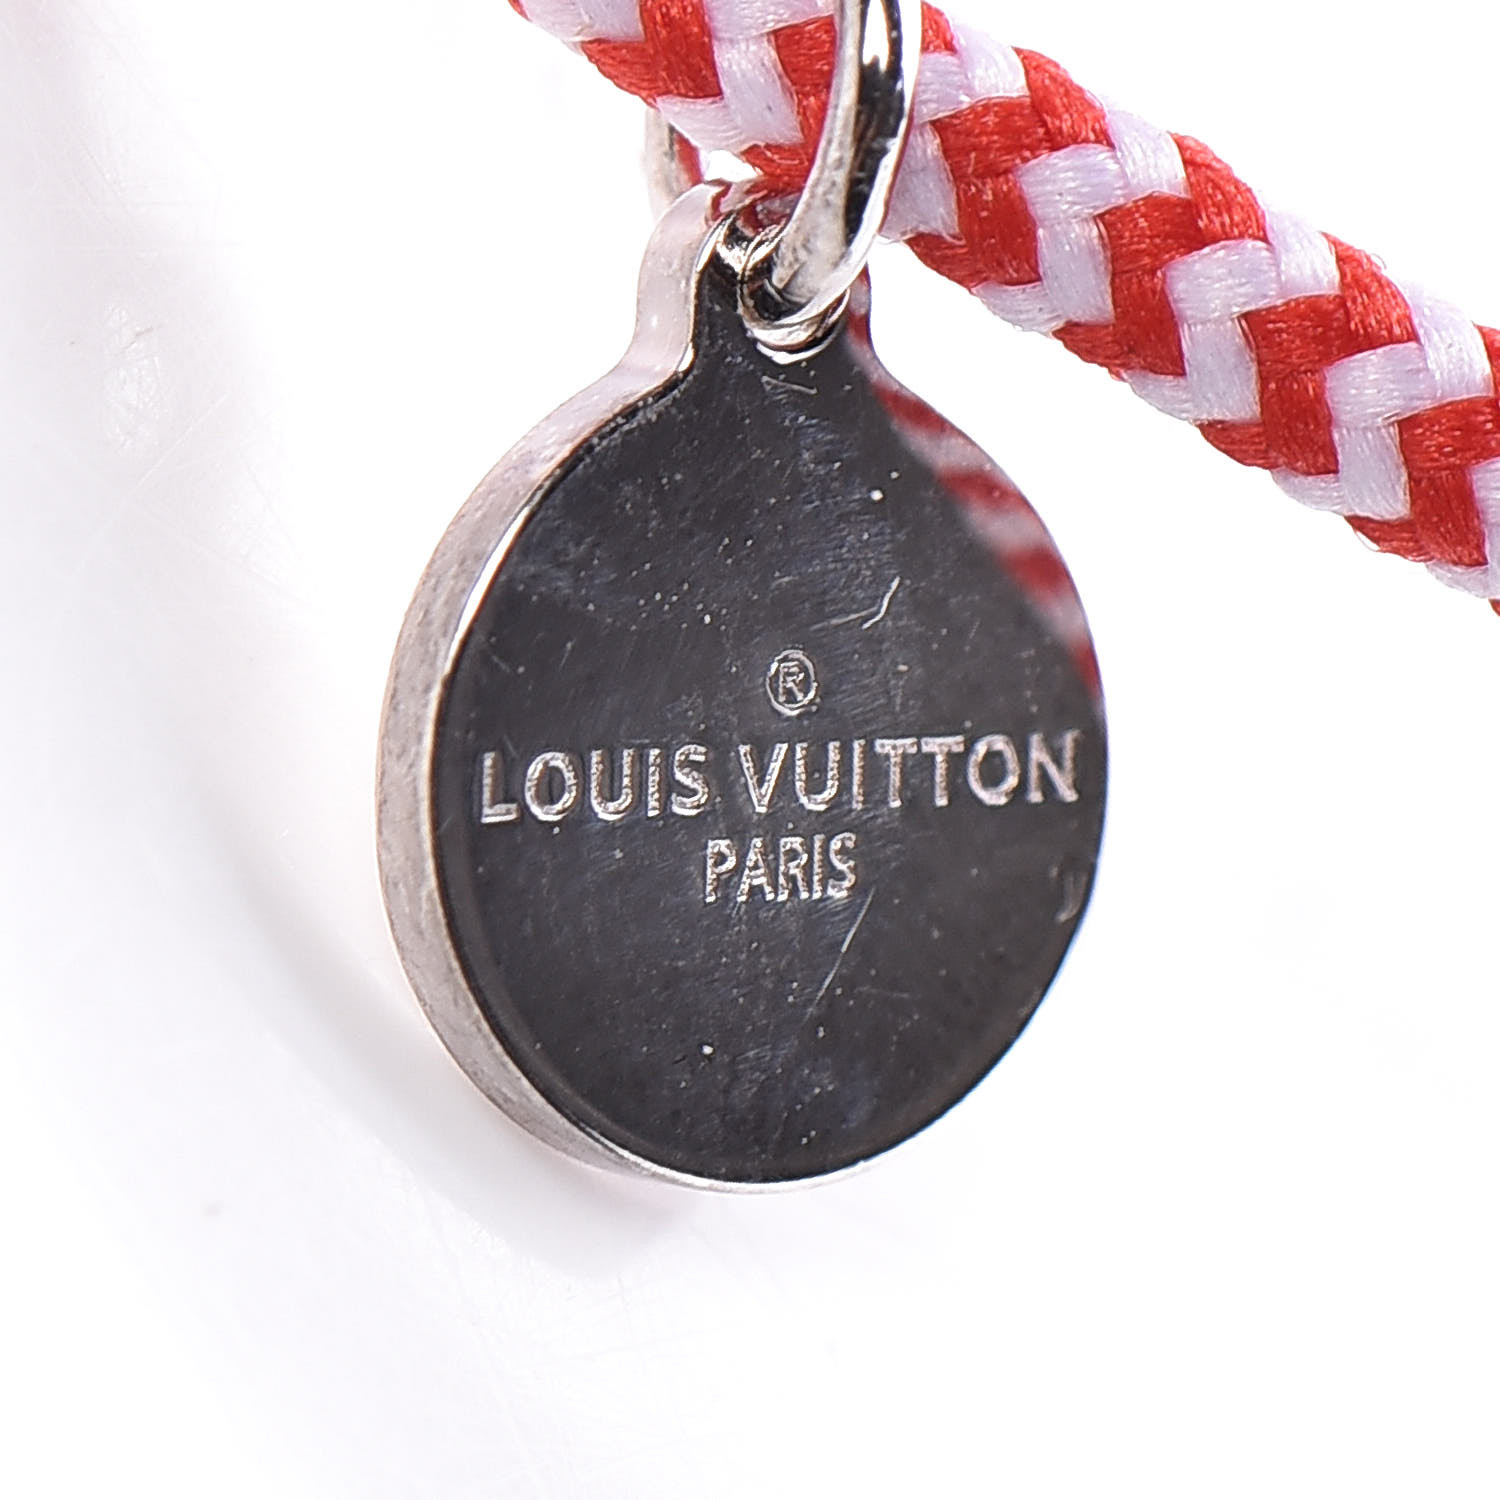 LOUIS VUITTON SOPHIE TURNER Sterling Silver Lockit Bracelet Red White 412665